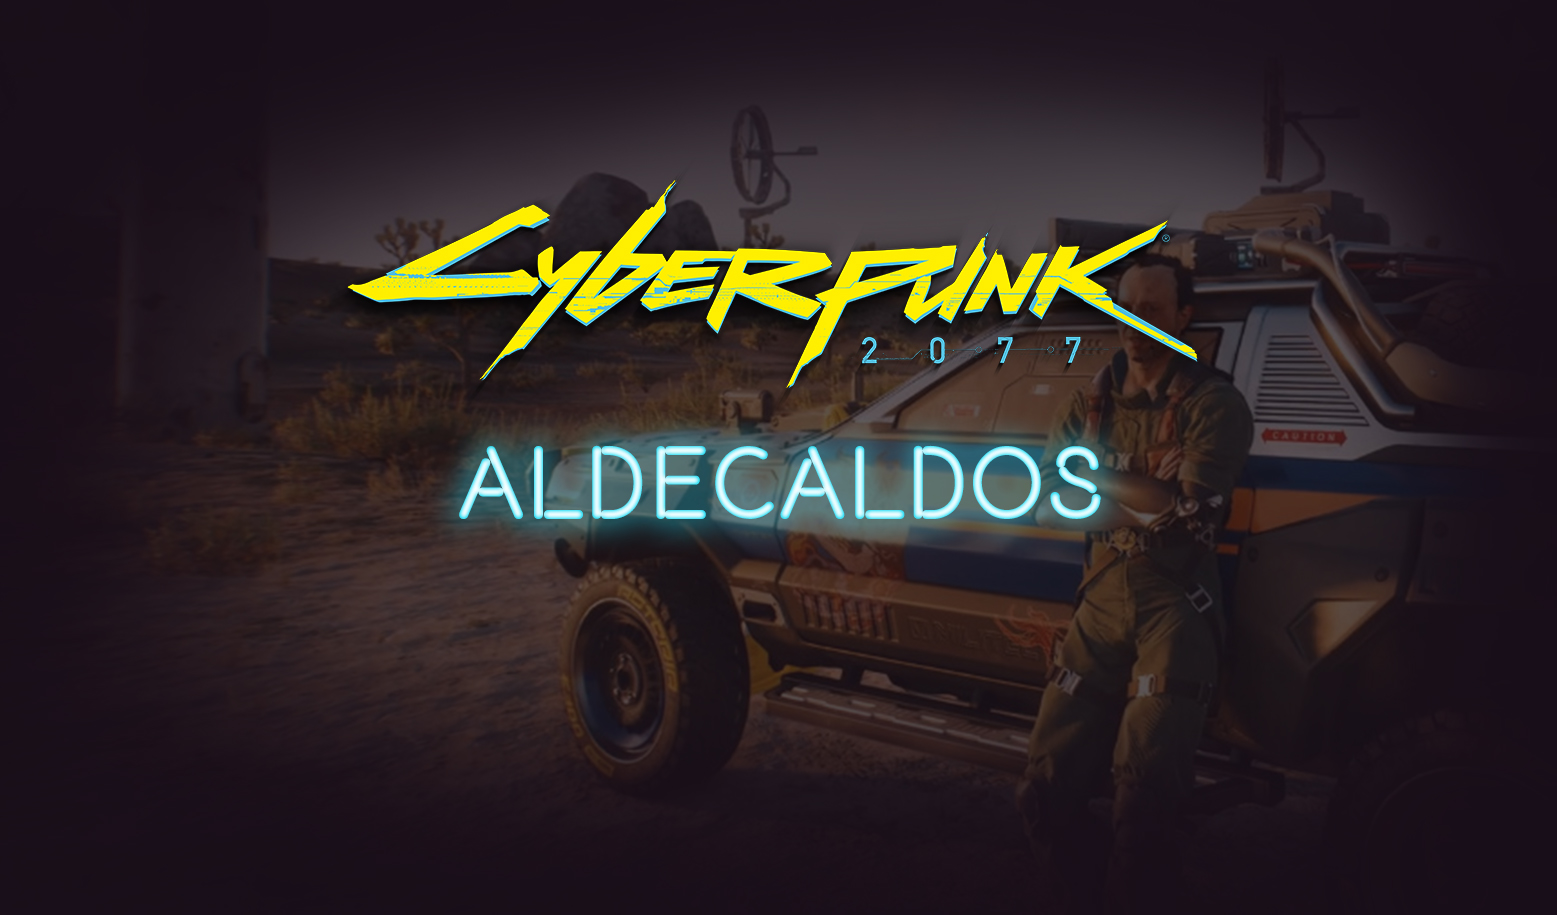 Aldecaldos Cyberpunk 2077 Gang